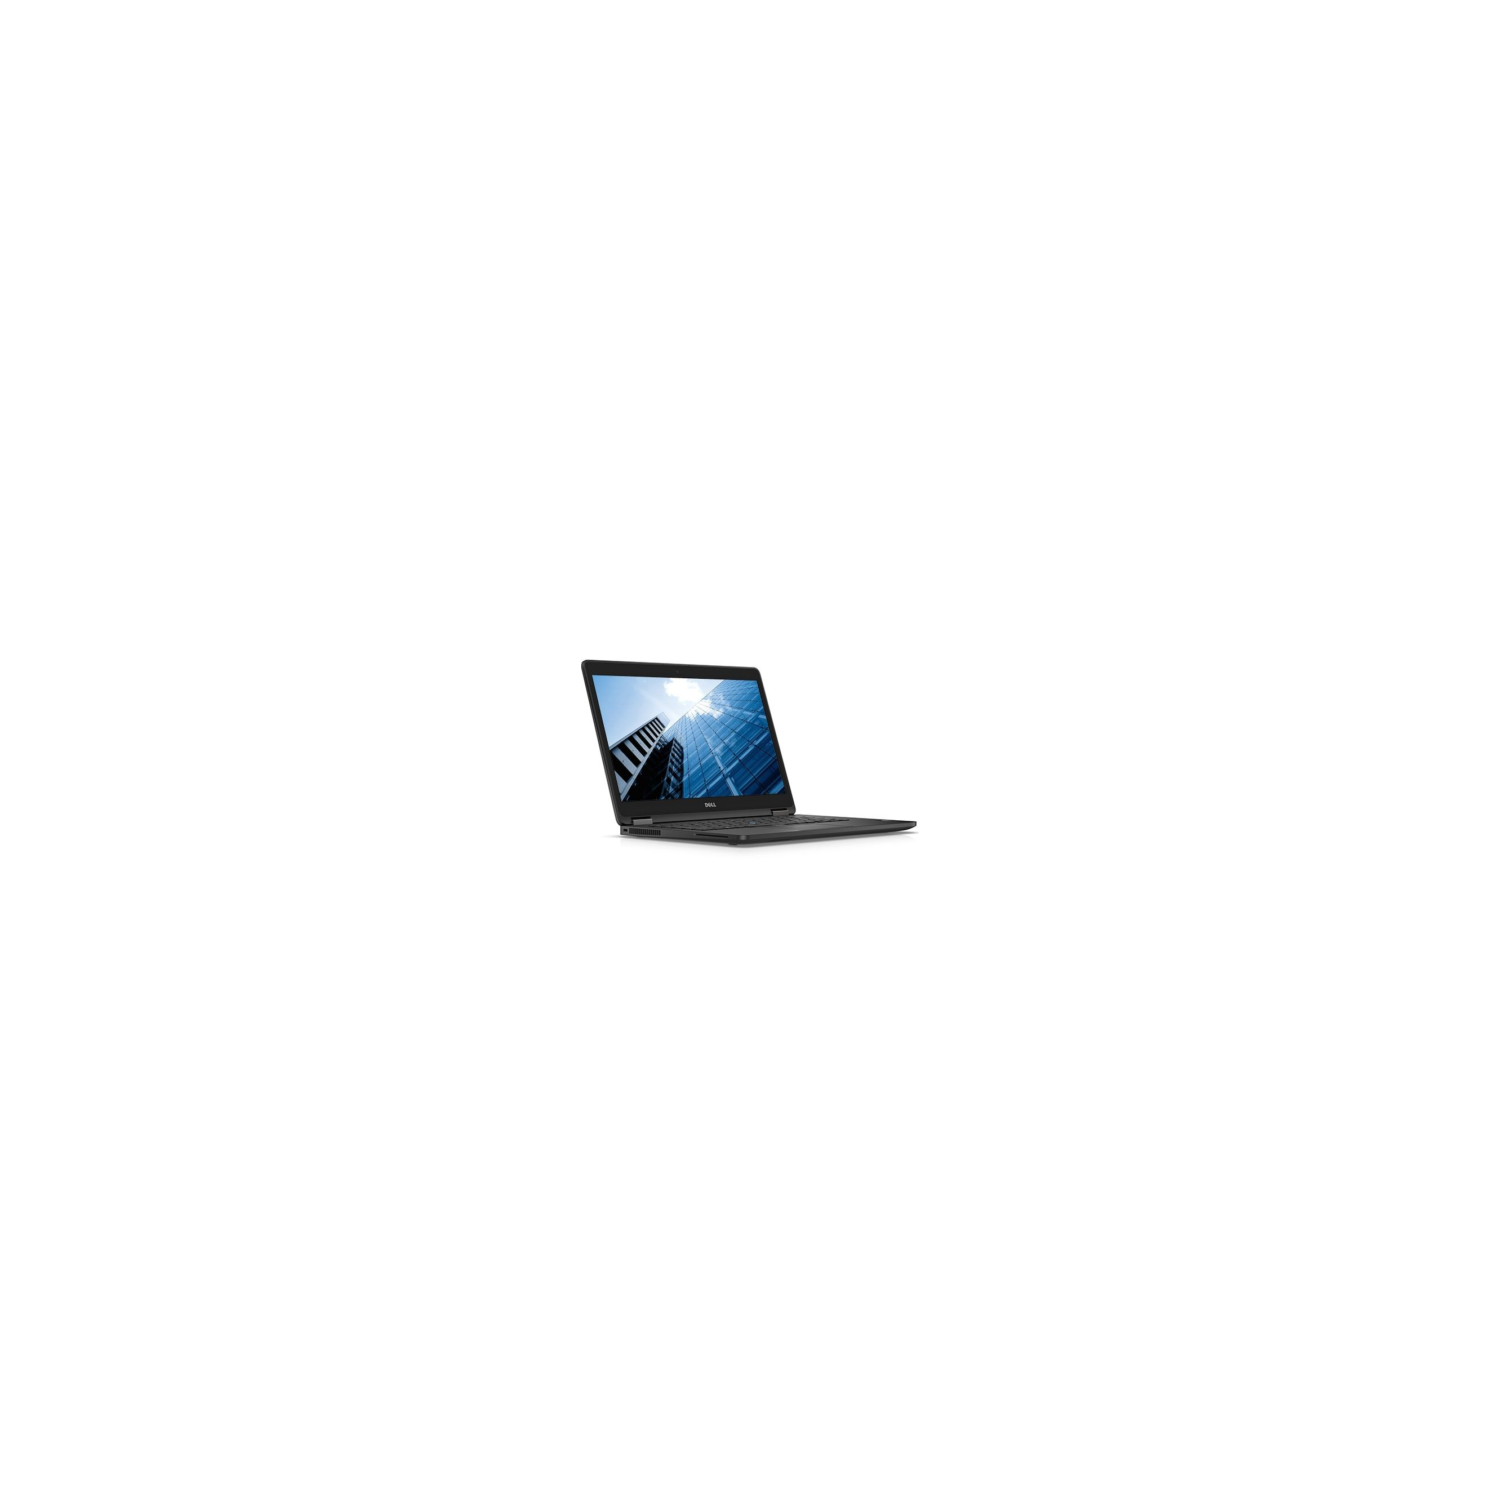 Refurbished (Good) - DELL Latitude E7470 14"HD UltraBook Laptop (Intel Core i5-6300U, 16GB RAM, 256GB SSD, (1366x768), WEBCAM)